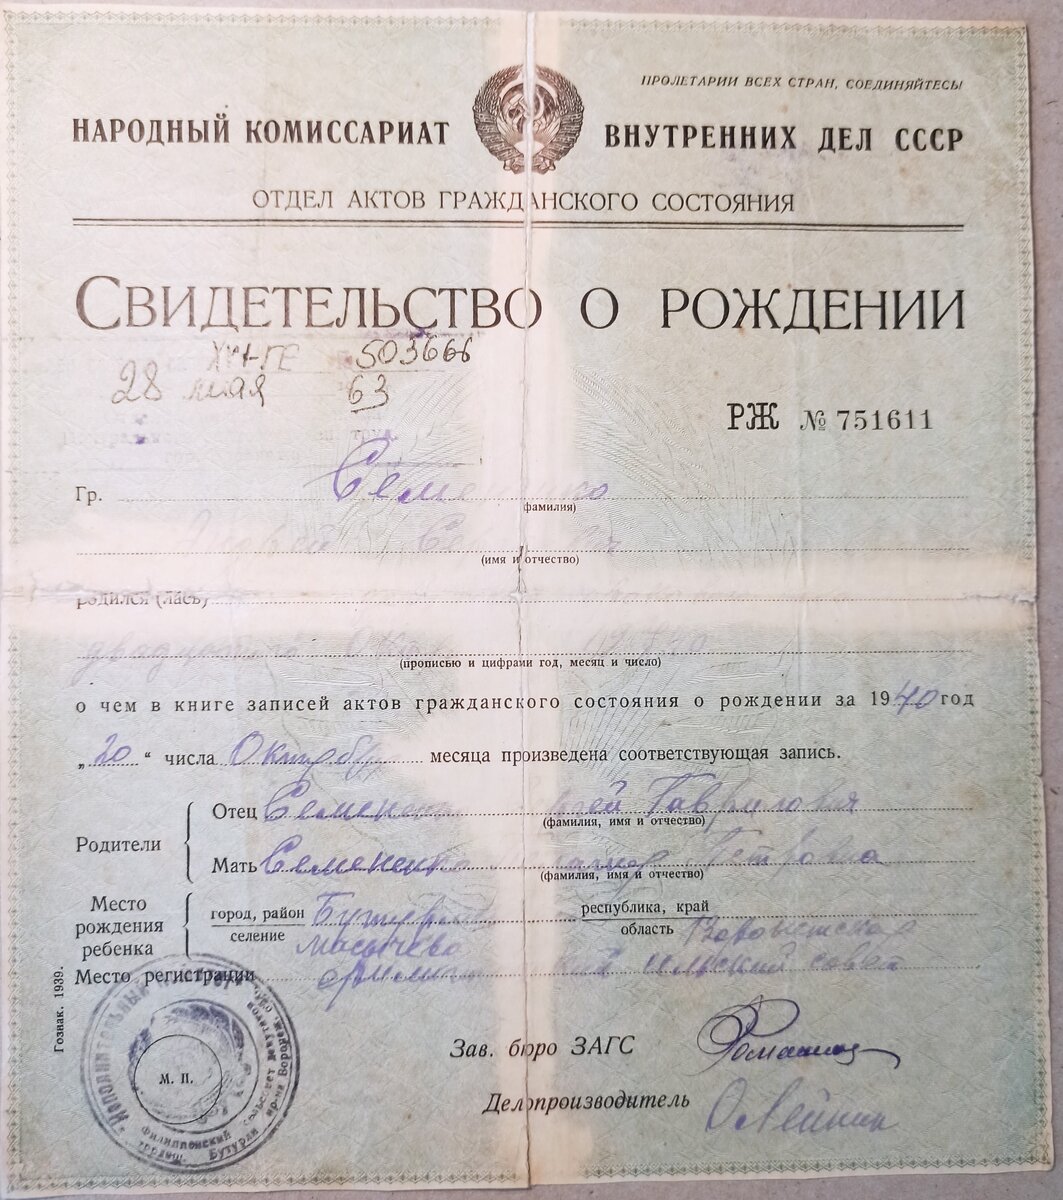 Свидетельство о рождении А.С.Семененко от 28.05.1963. Из архива А.А.Семененко.